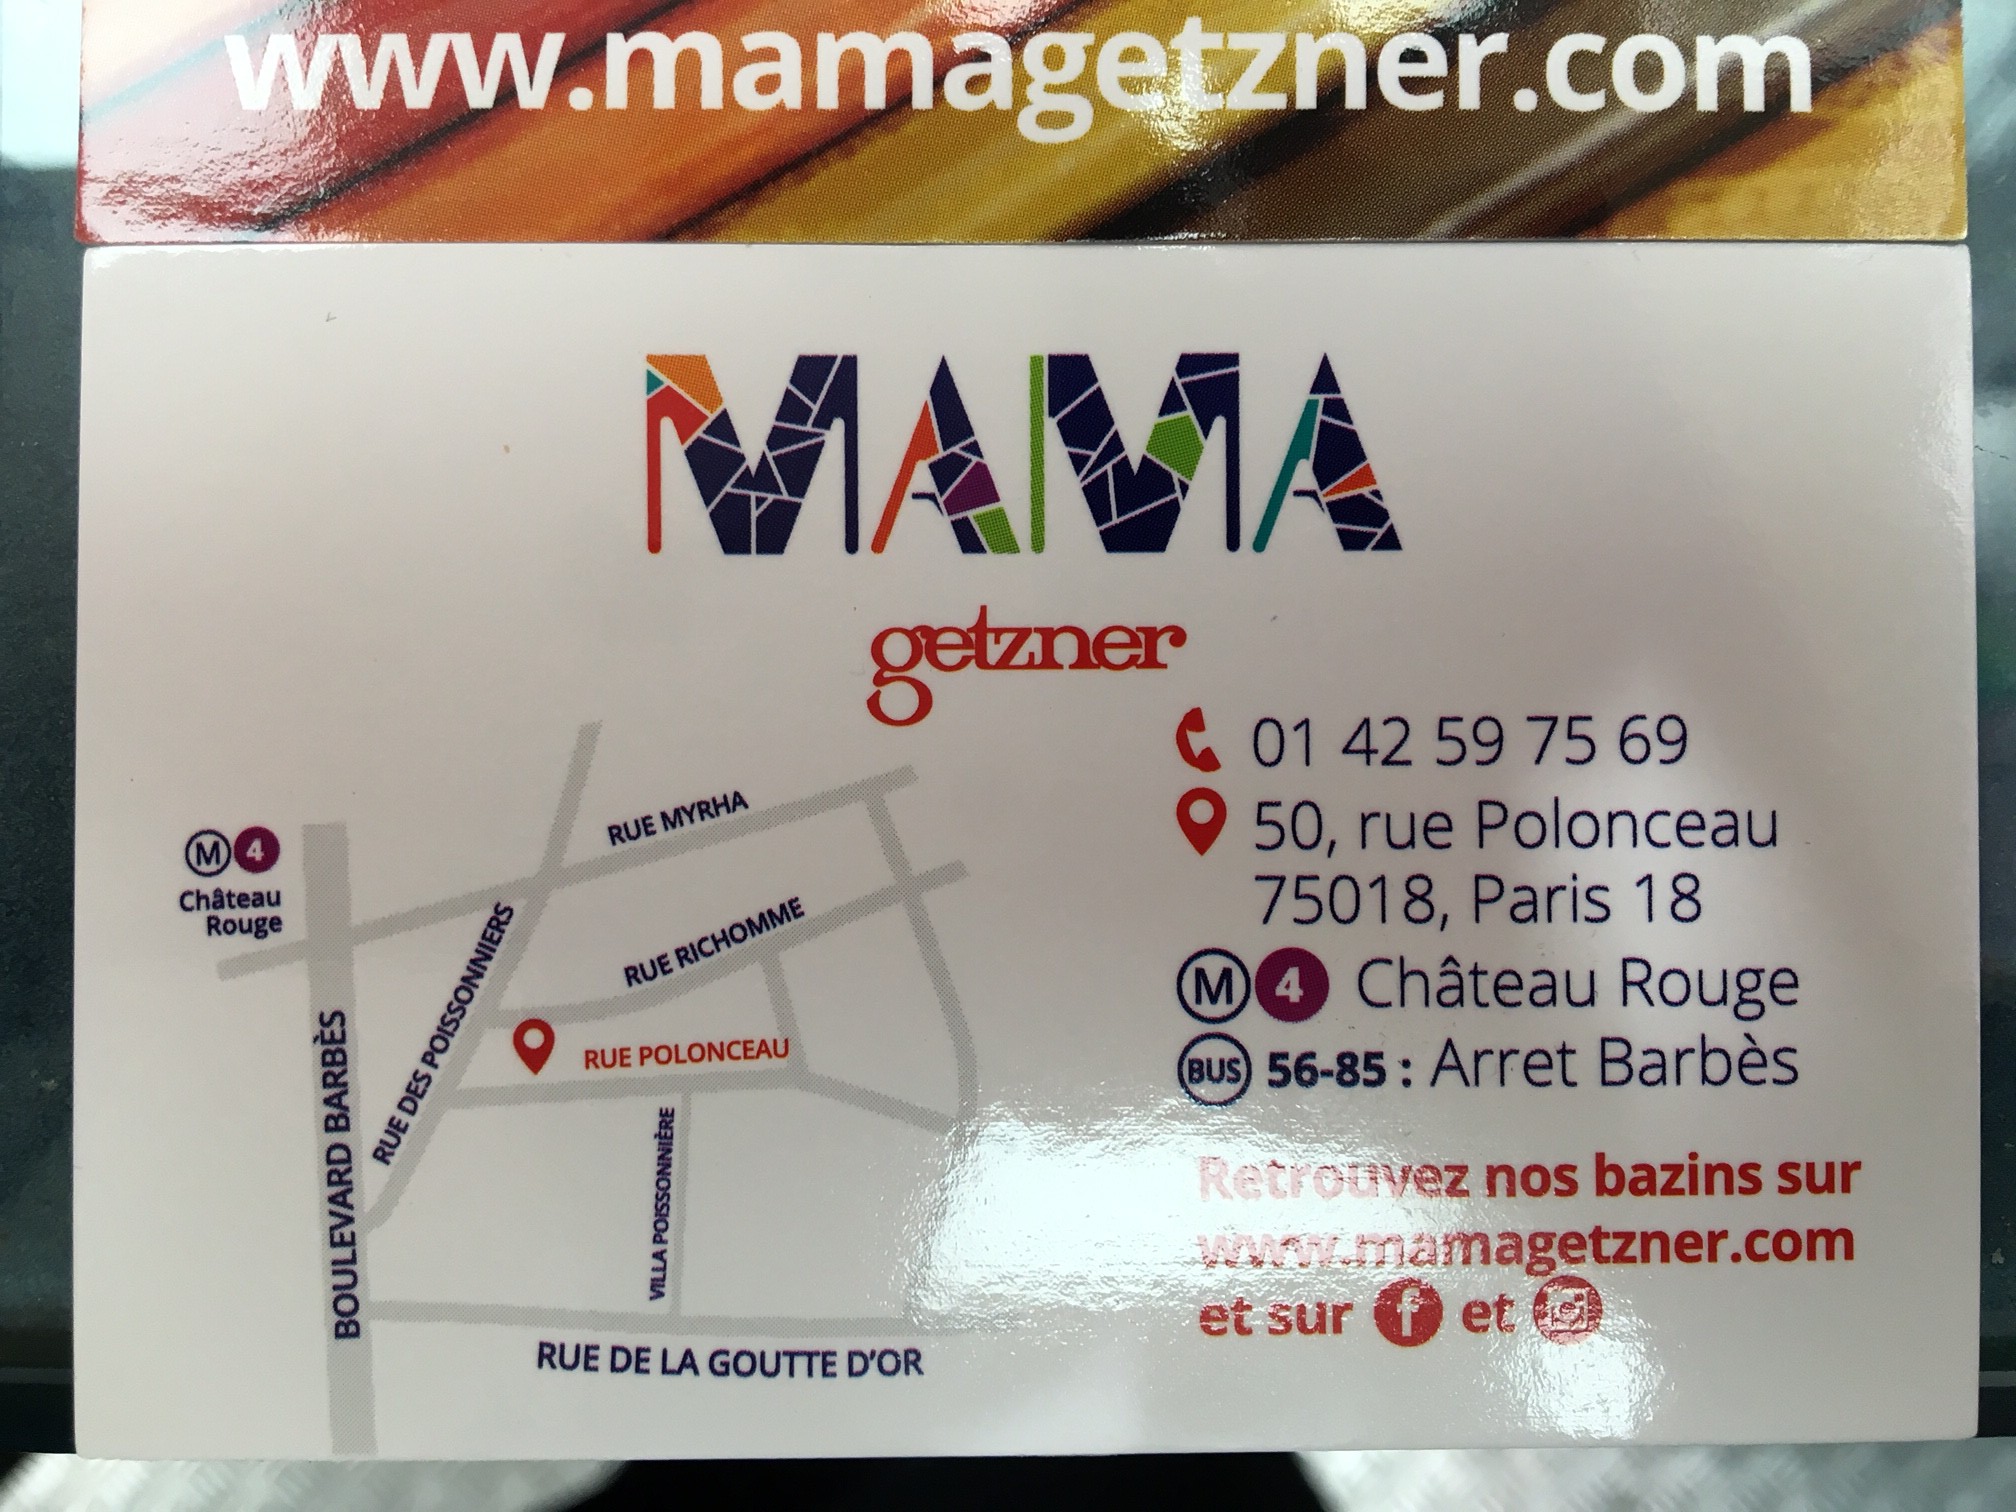 Achetez du GETZNER authentique chez Gérard alias Mama Getzner  à PARIS